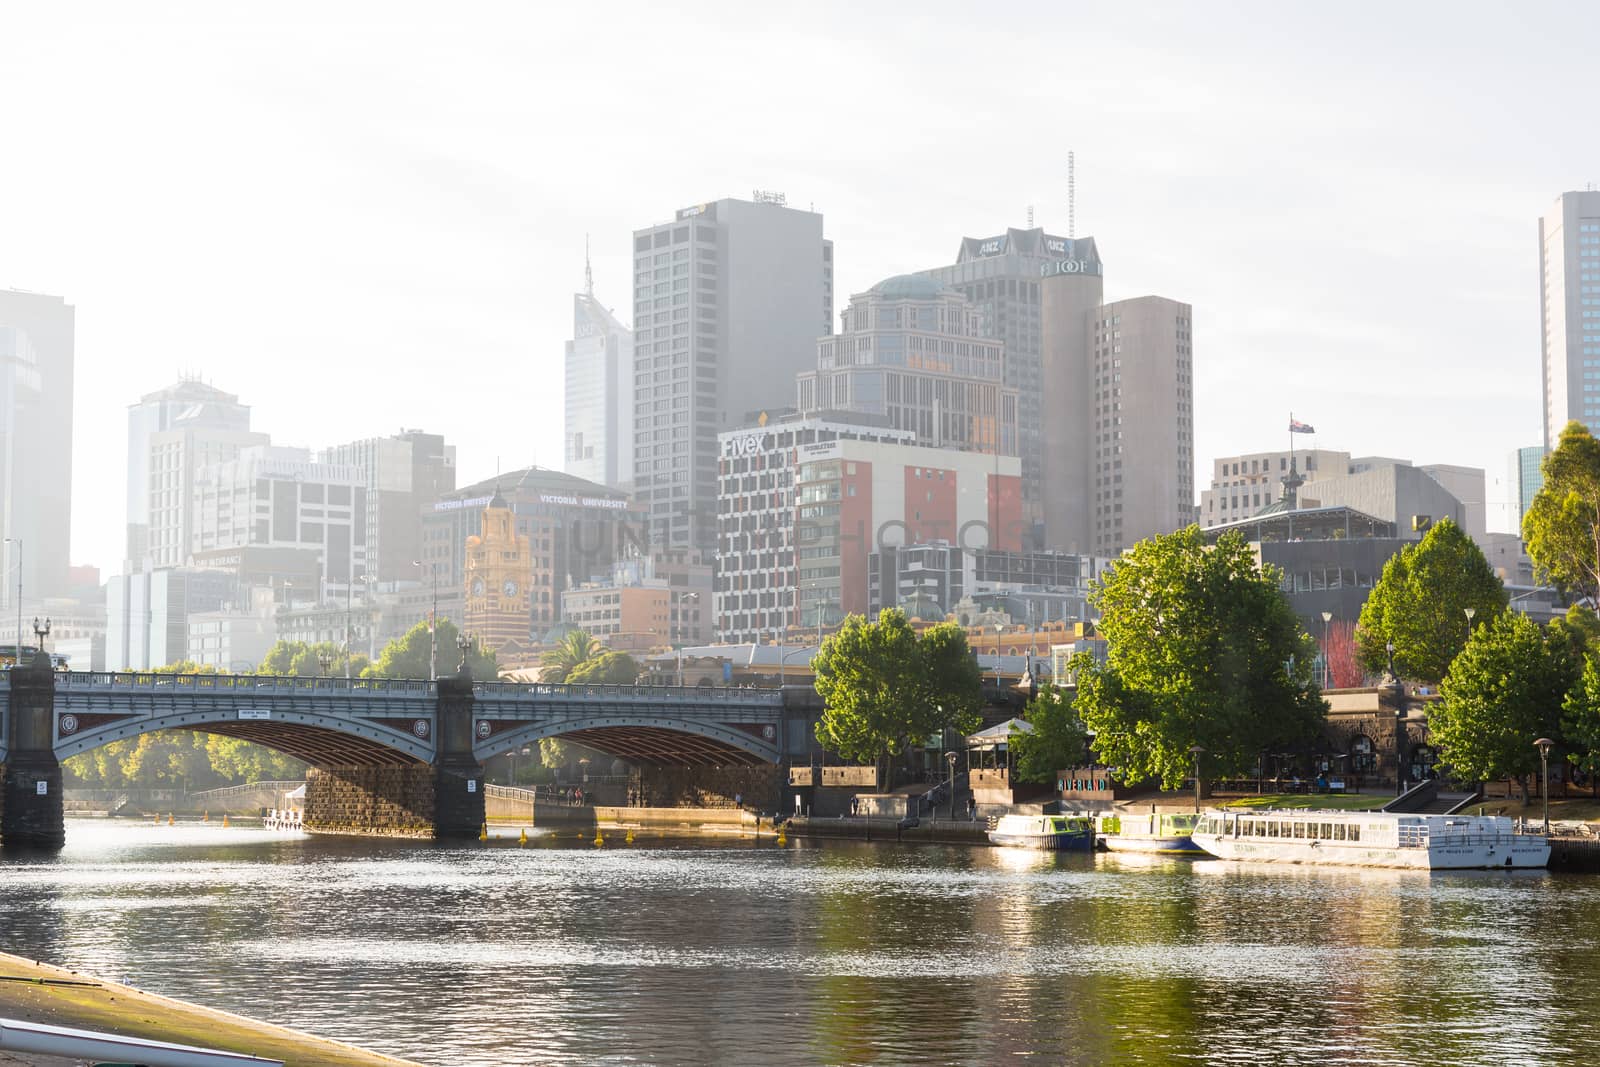 Melbourne's Princess Bridge - Yarra River by davidhewison